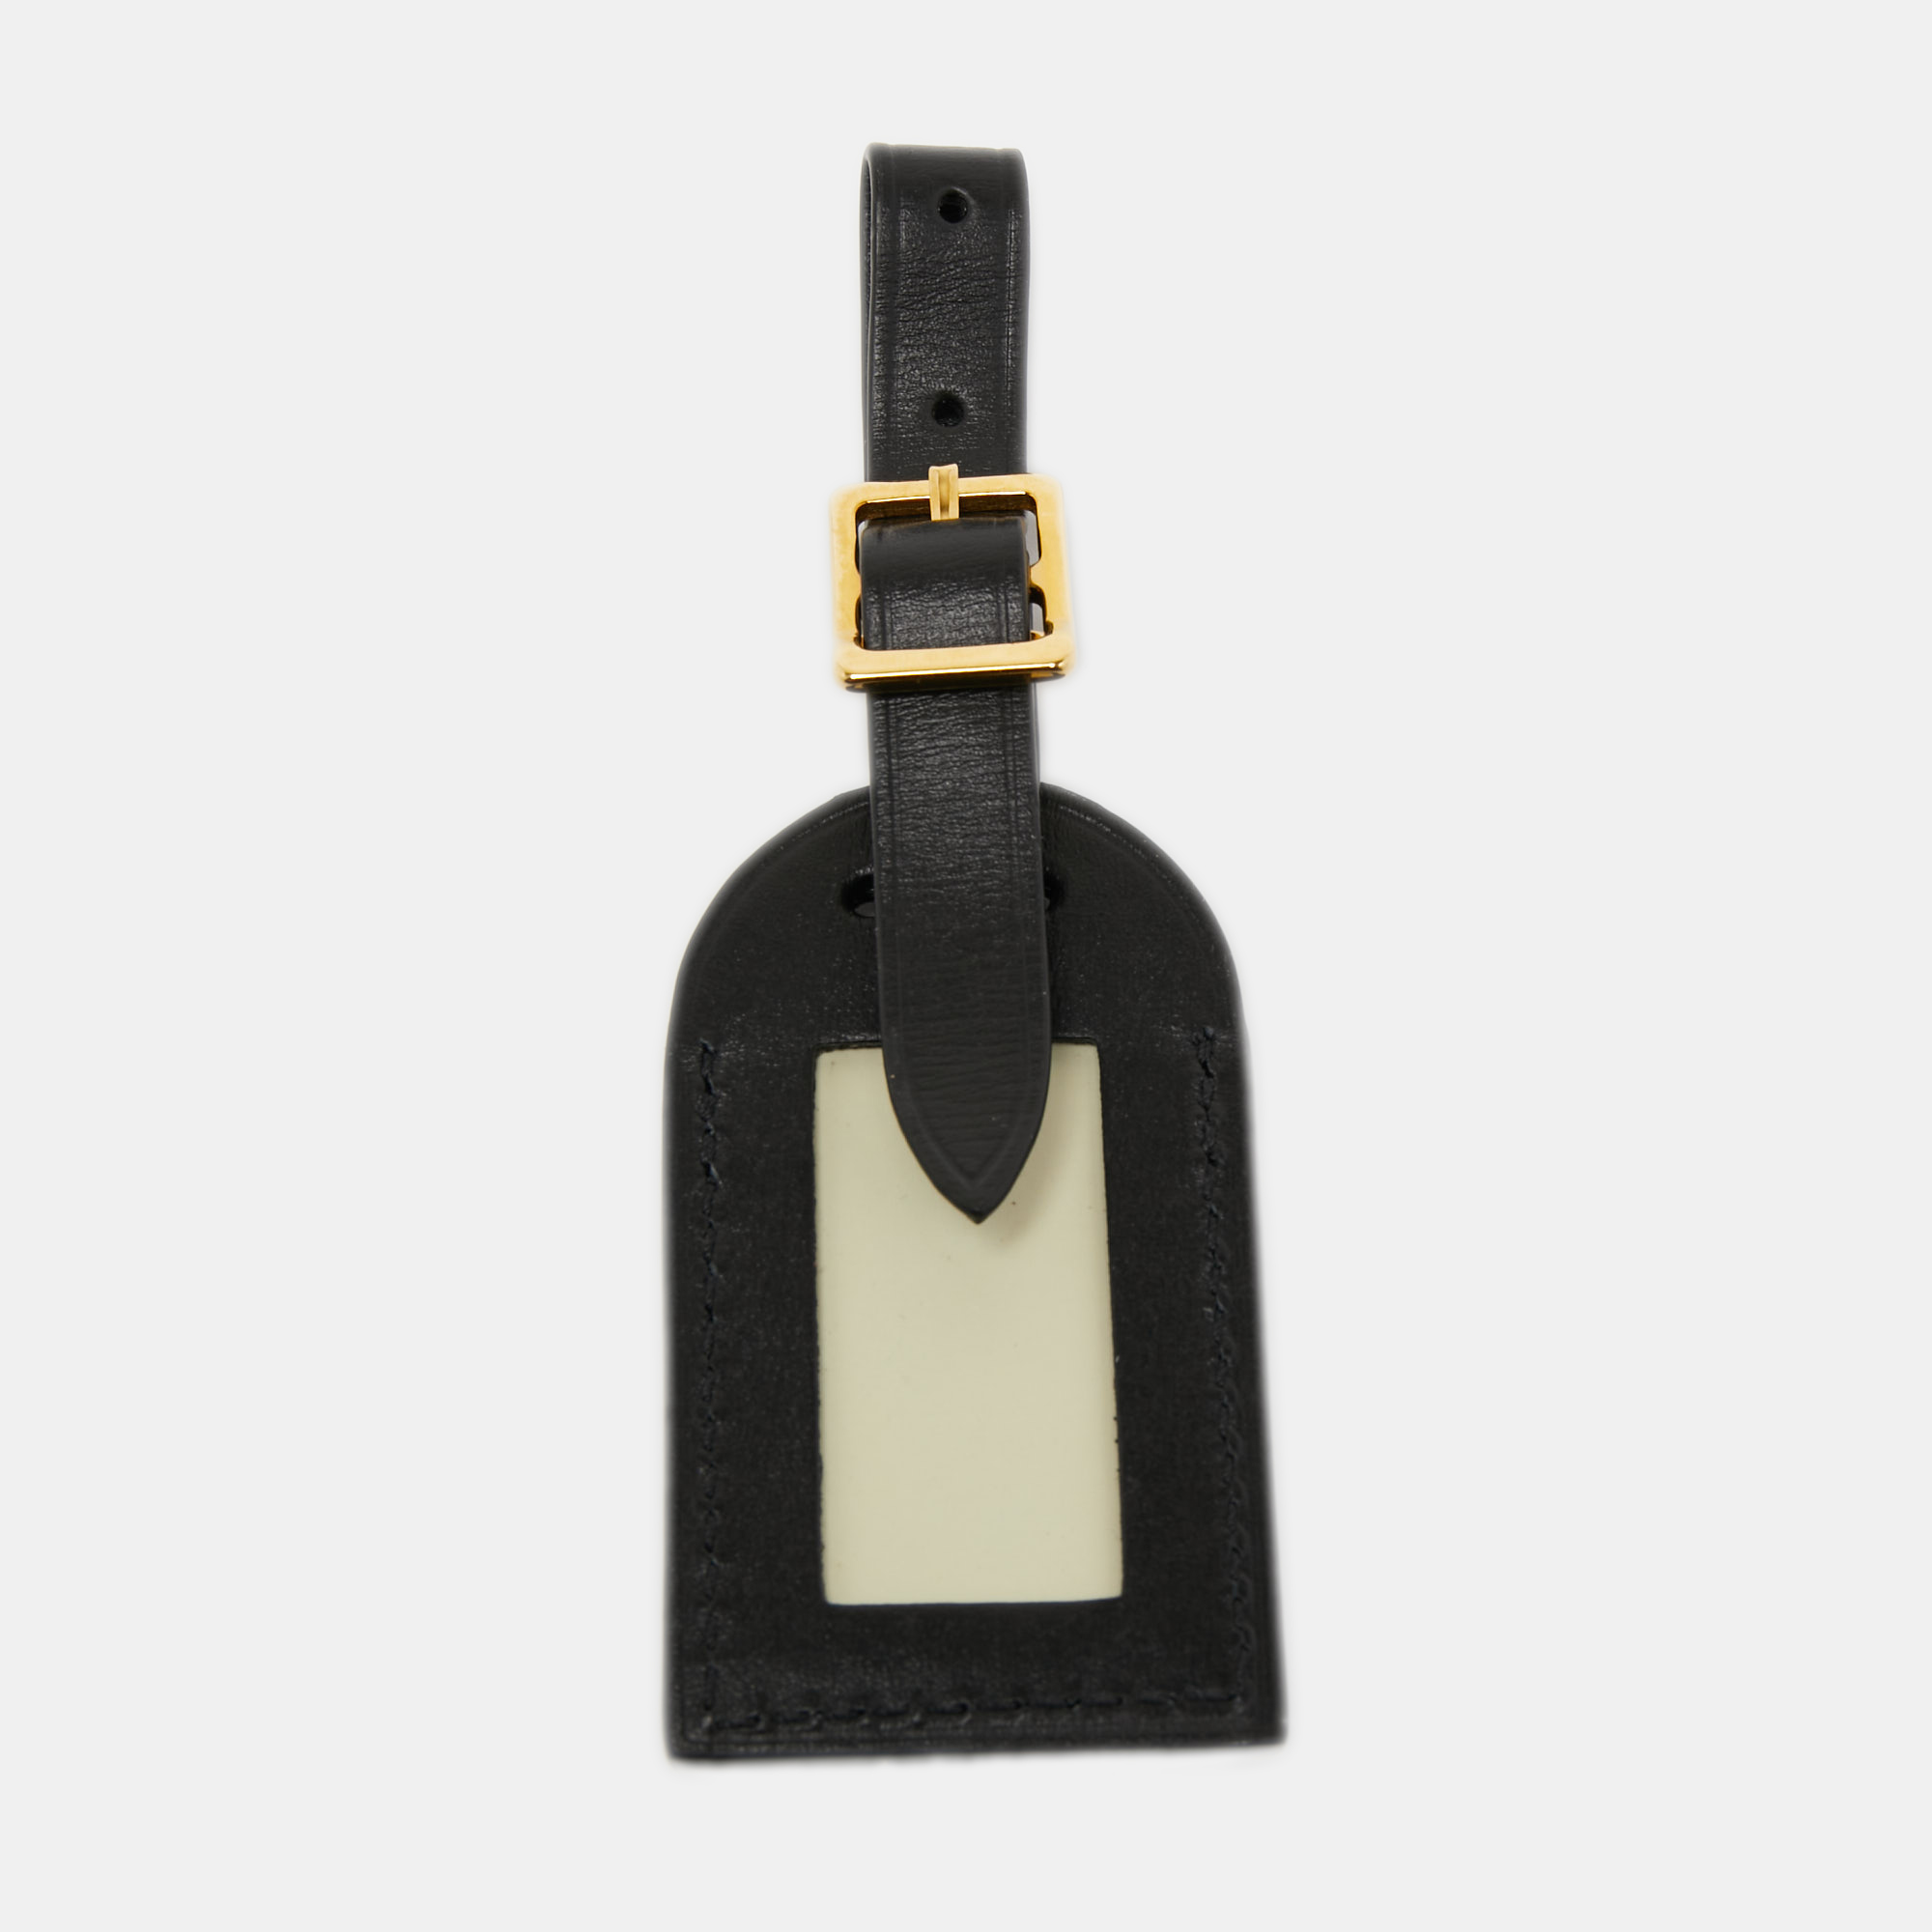 Louis Vuitton Name Tag Black Calfskin Leather w/ RZ Initials Goldtone –  PoshBagShop